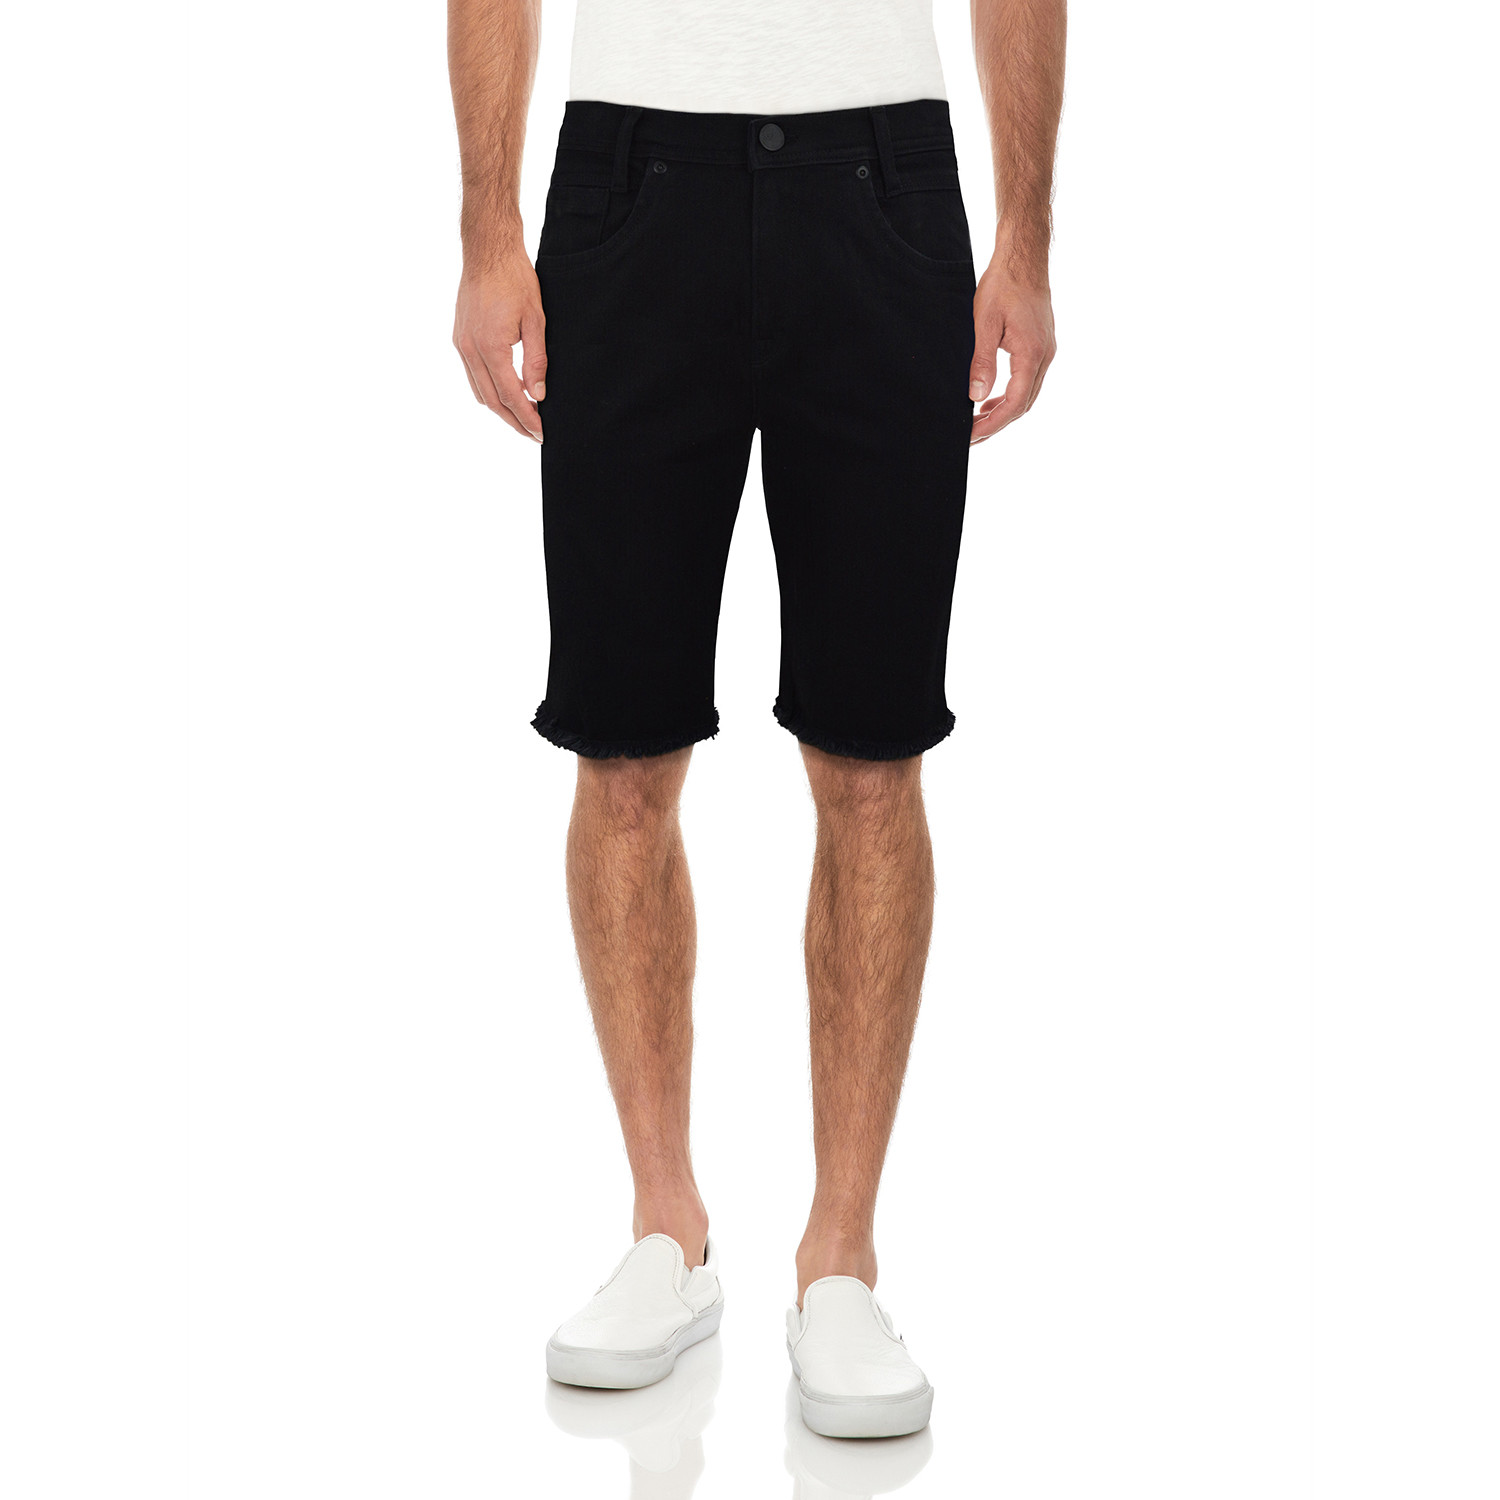 black frayed denim shorts